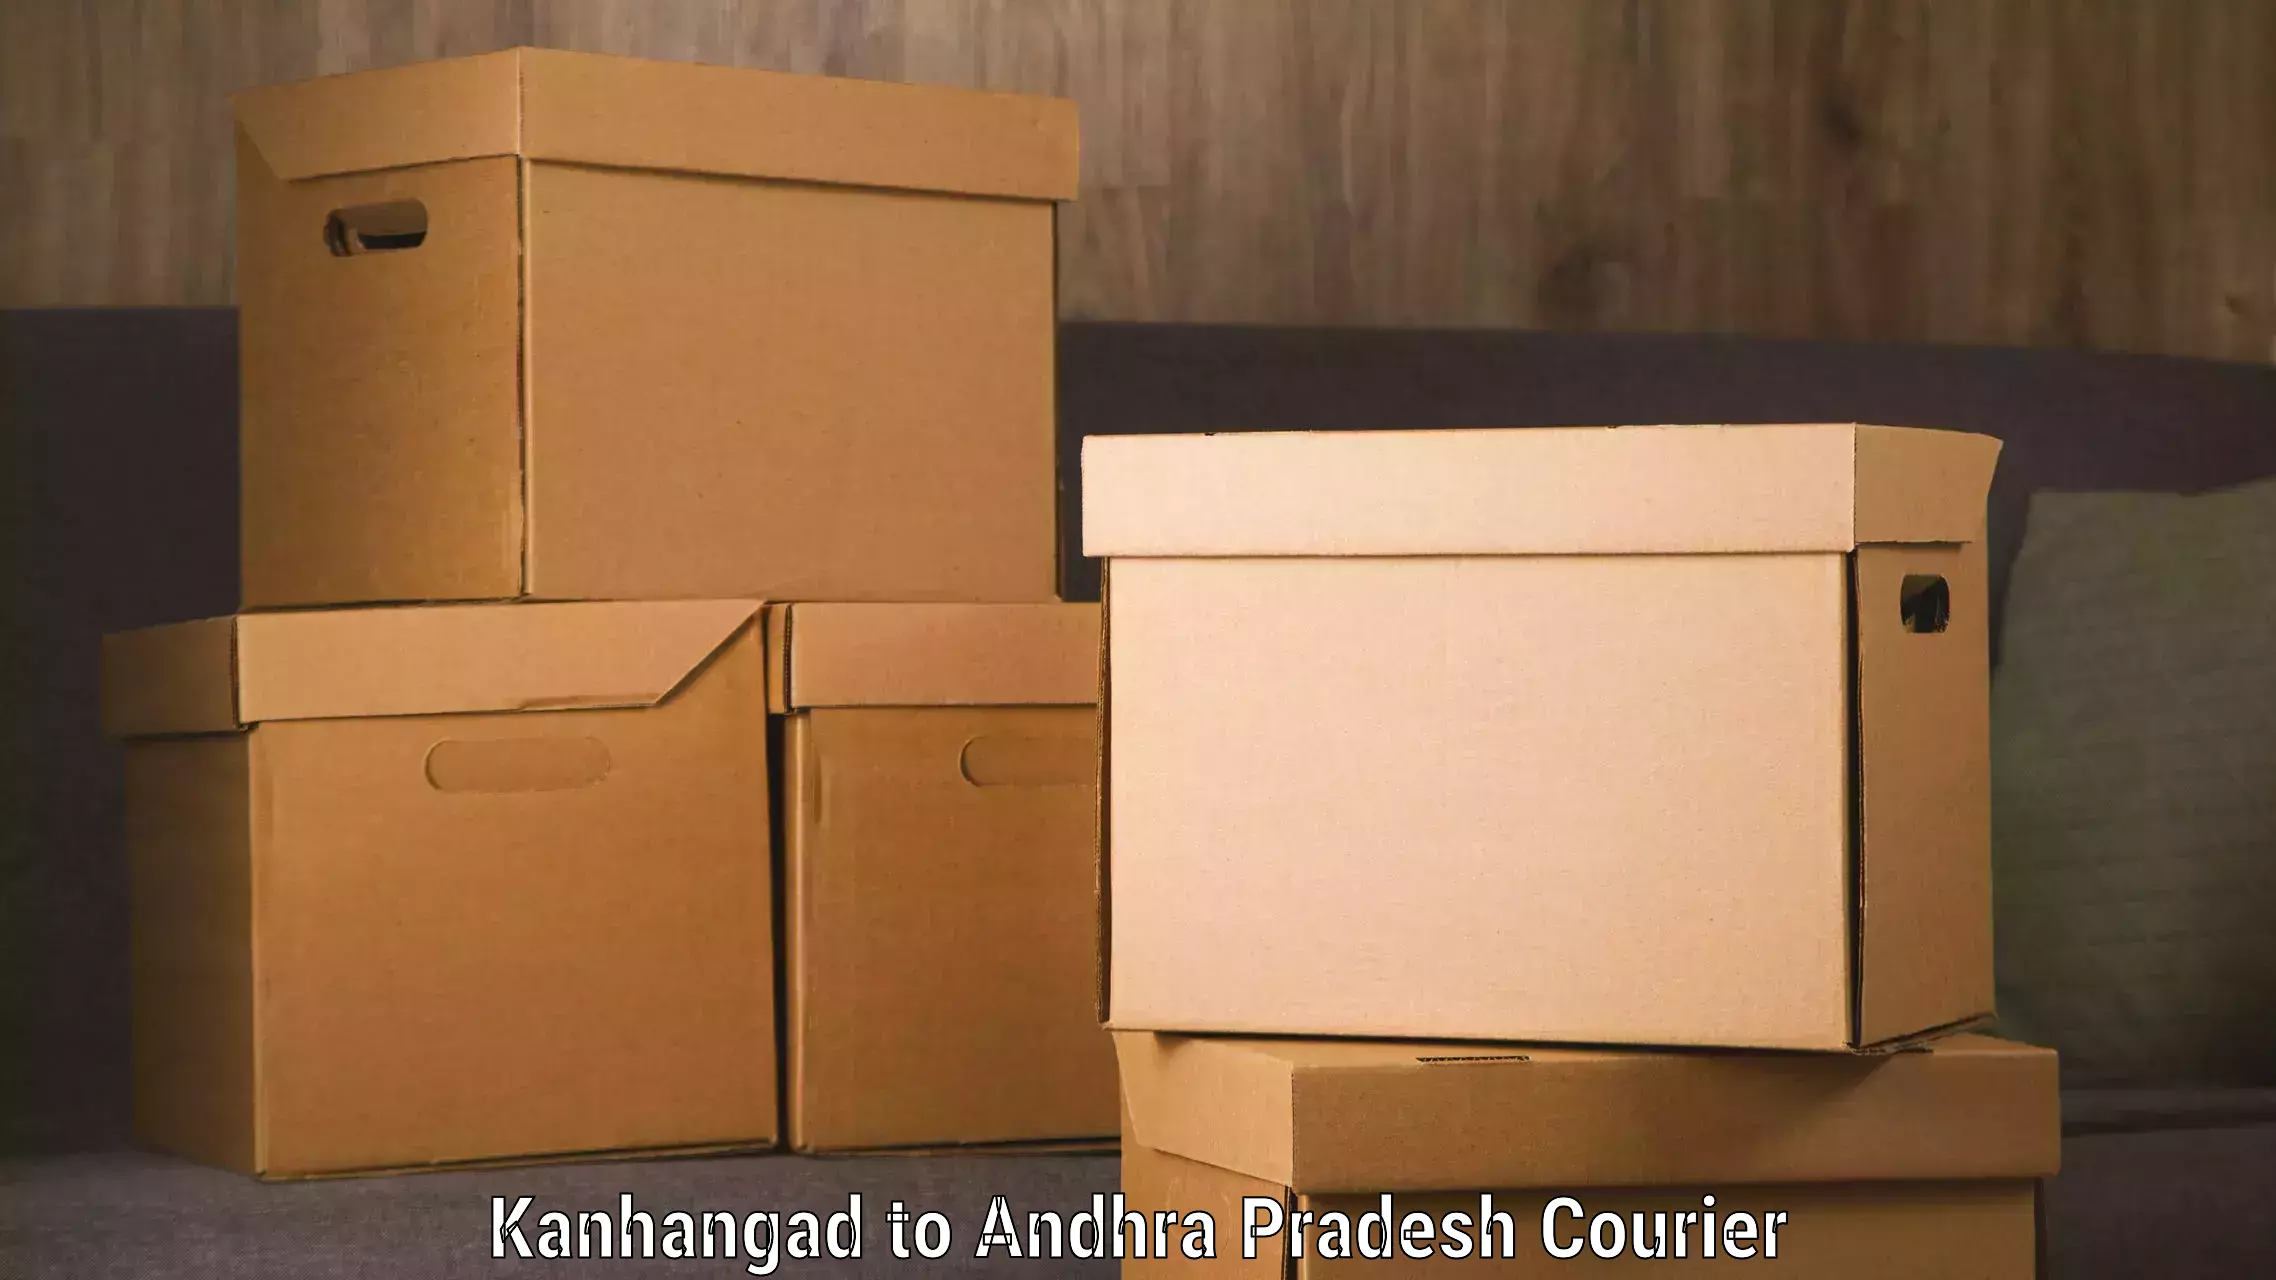 Courier service comparison in Kanhangad to Kotturu Srikakulam